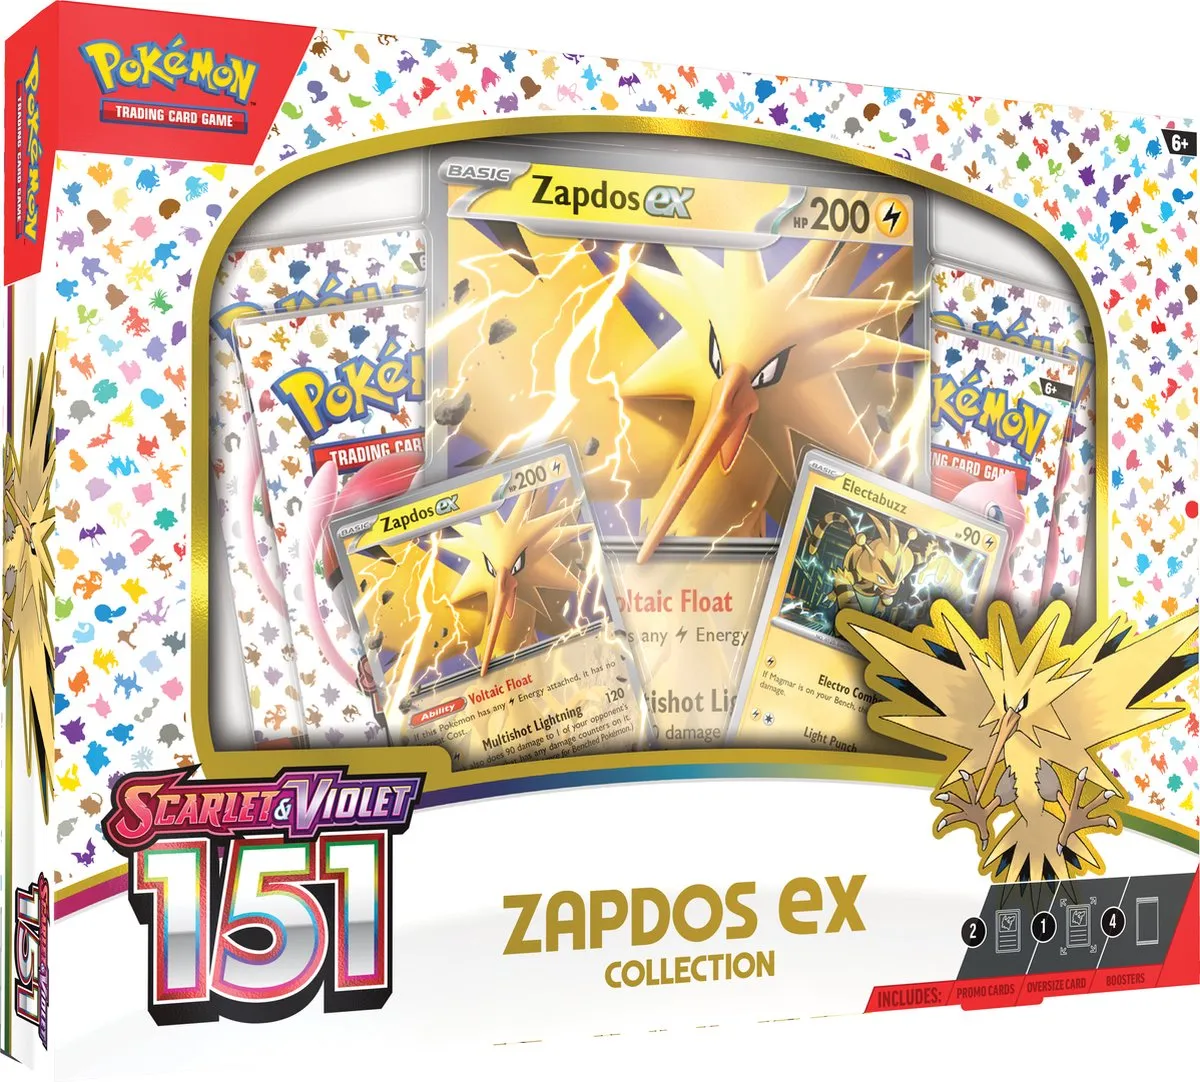 Pokémon Scarlet & Violet 151 Zapdos ex Box - Pokémon Kaarten speelgoed